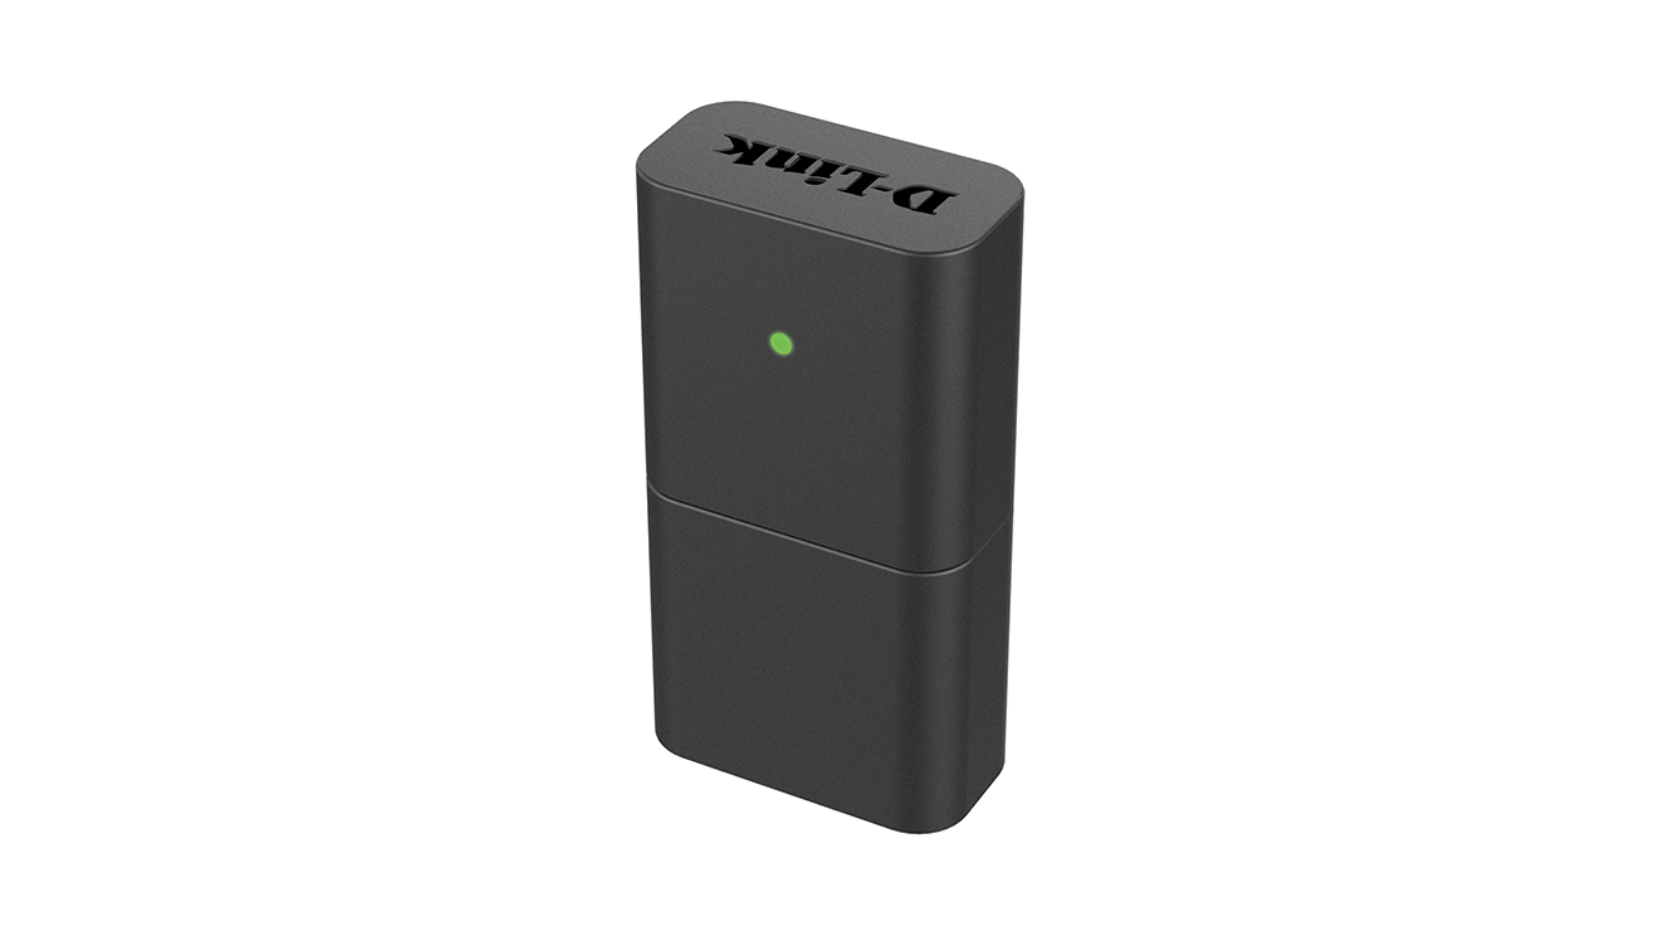 Wireless N 300 USB 2.0 nano Adapter (DWA-131/EU)